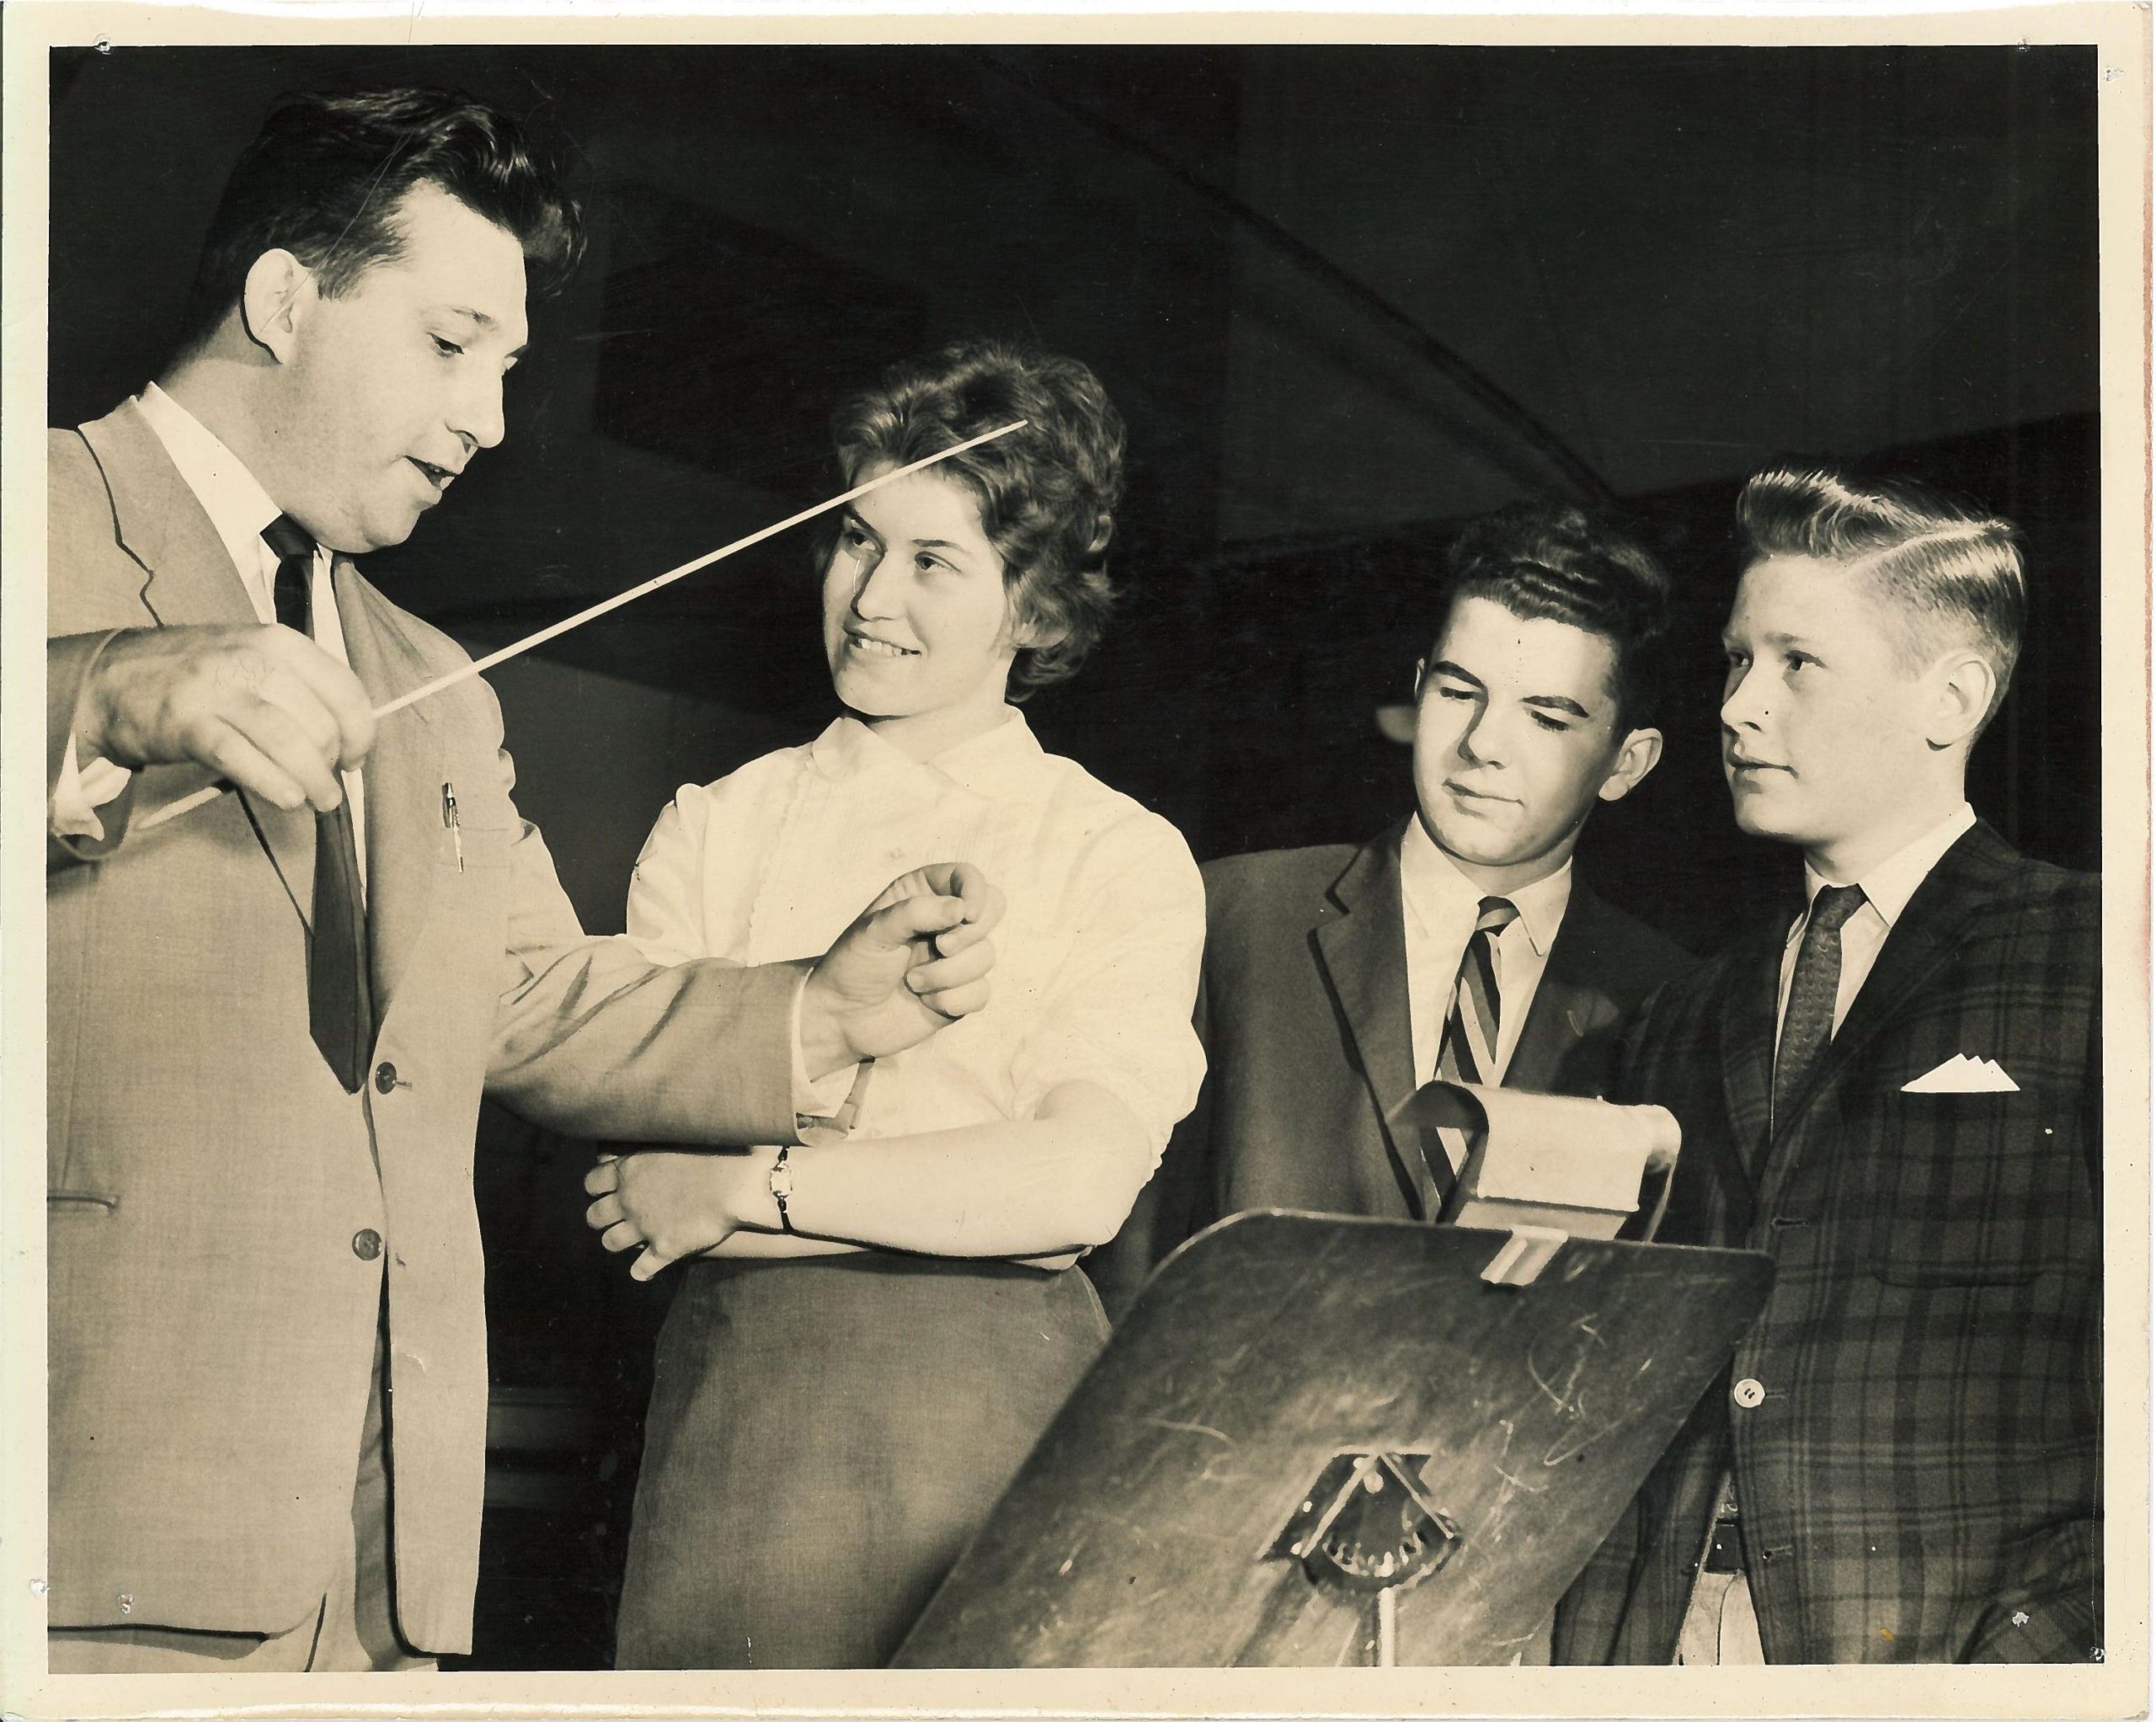 8 leonard pearlman 1960 students at rehearsal